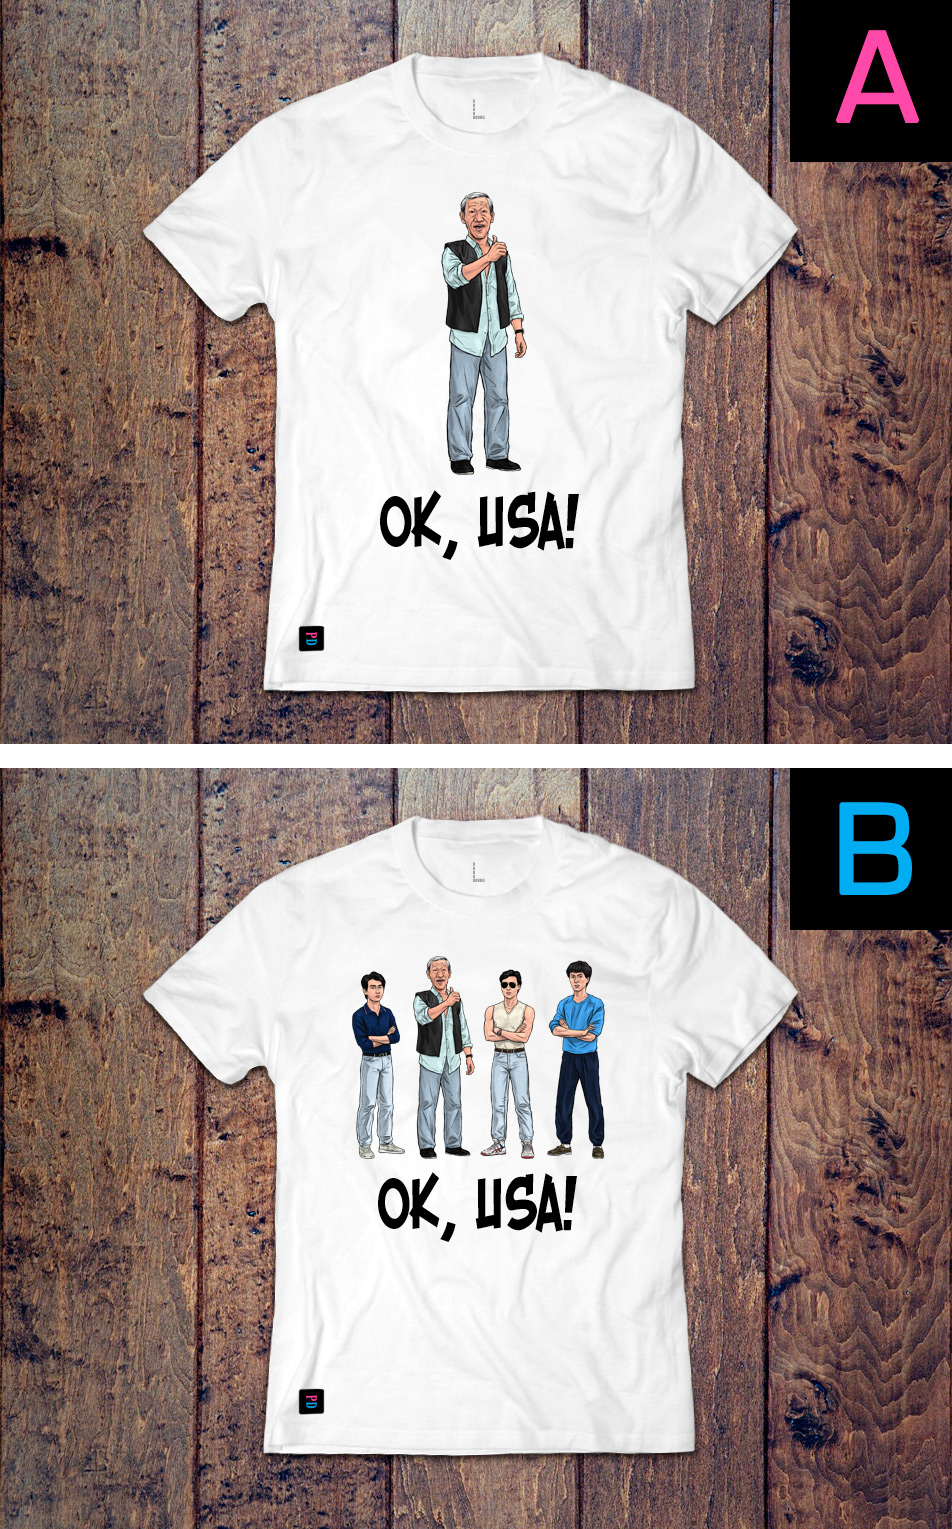 OK, USA! PD T-Shirt designs by Marten Go aka MGO